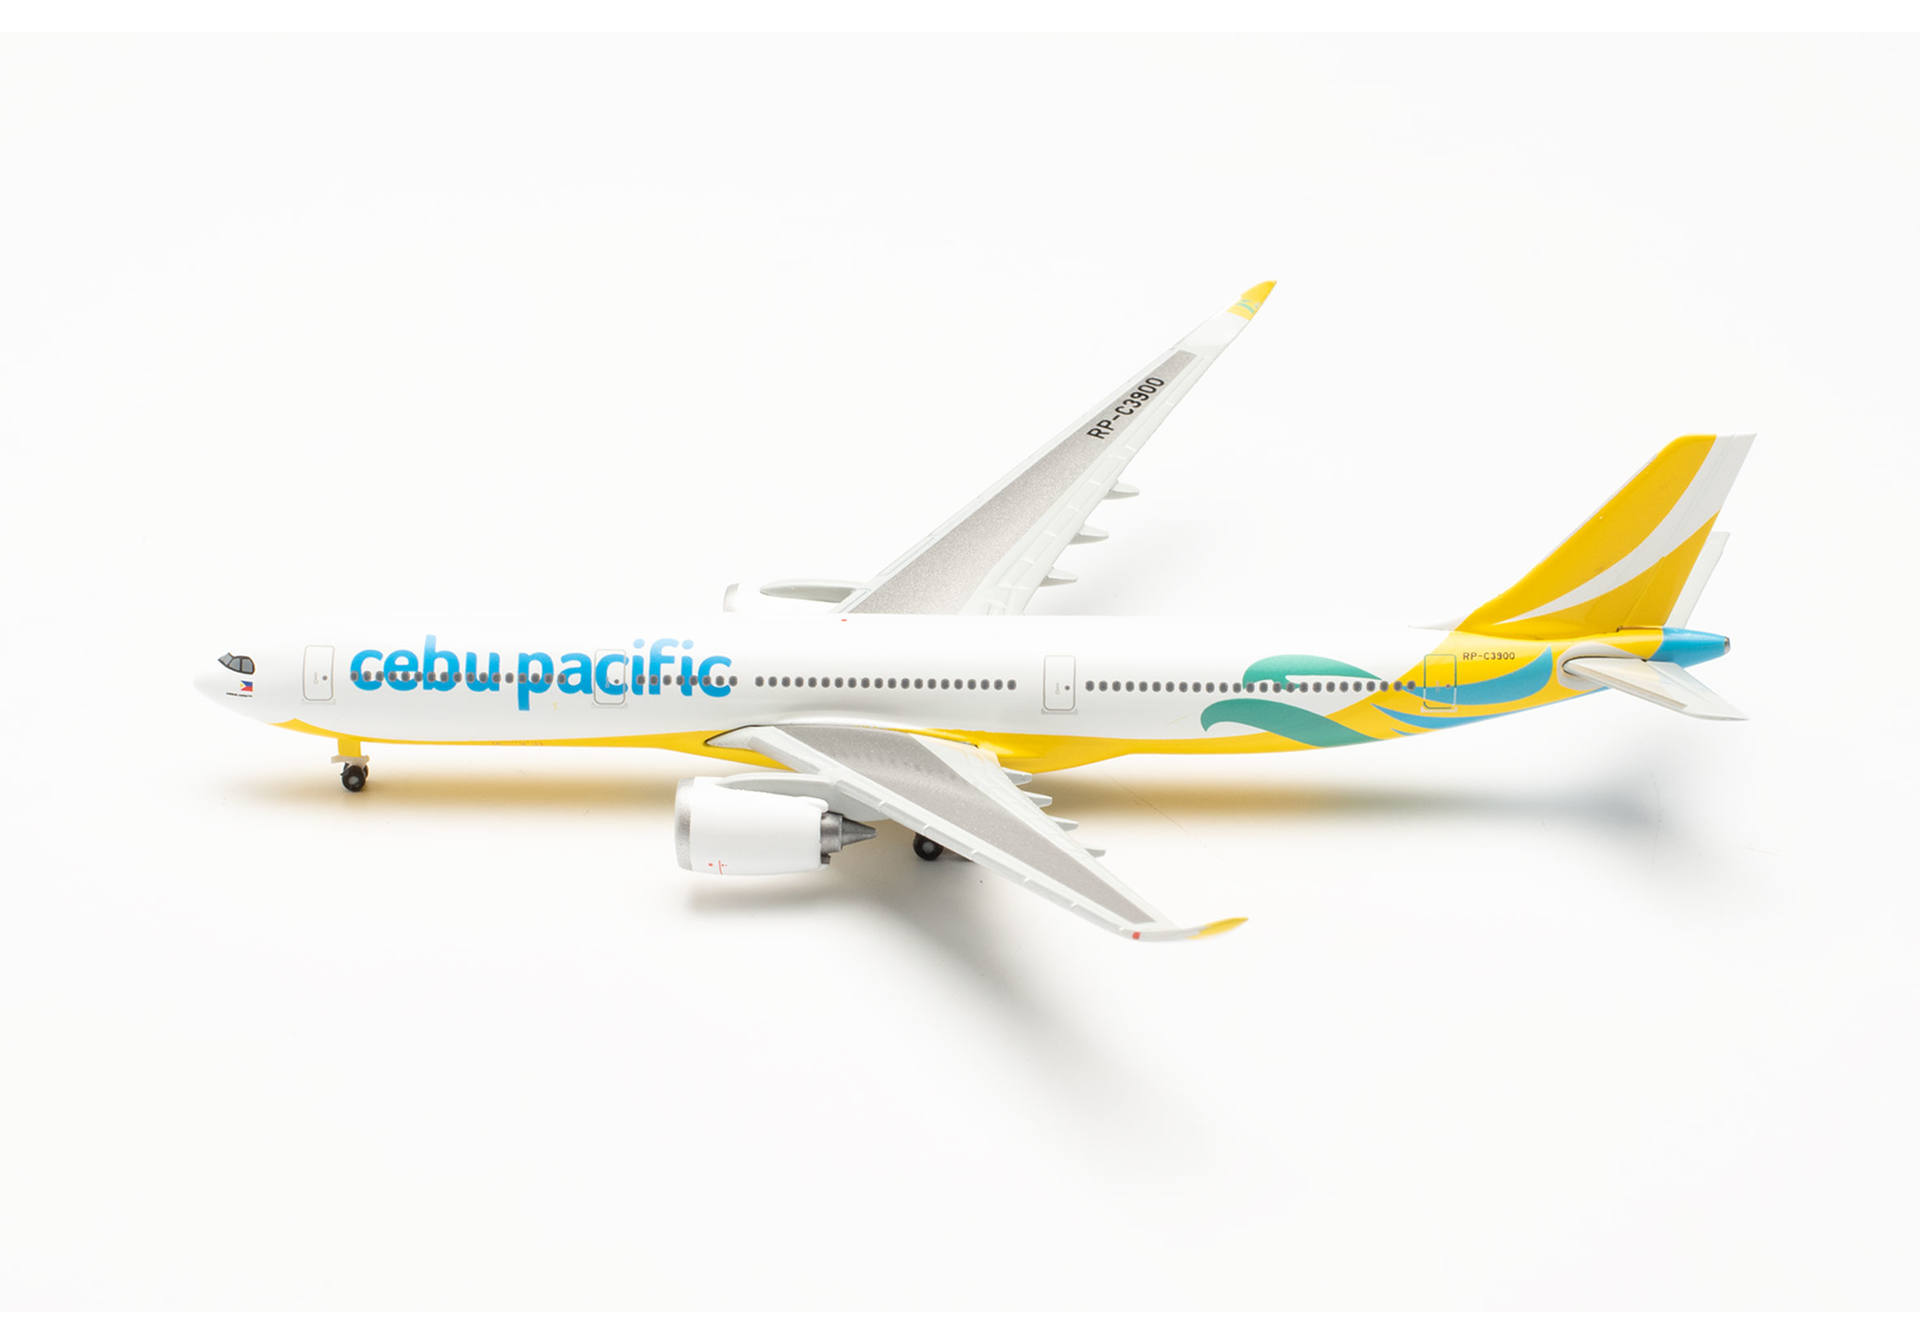 Cebu Pacific Airbus A330-900neo – RP-C3900